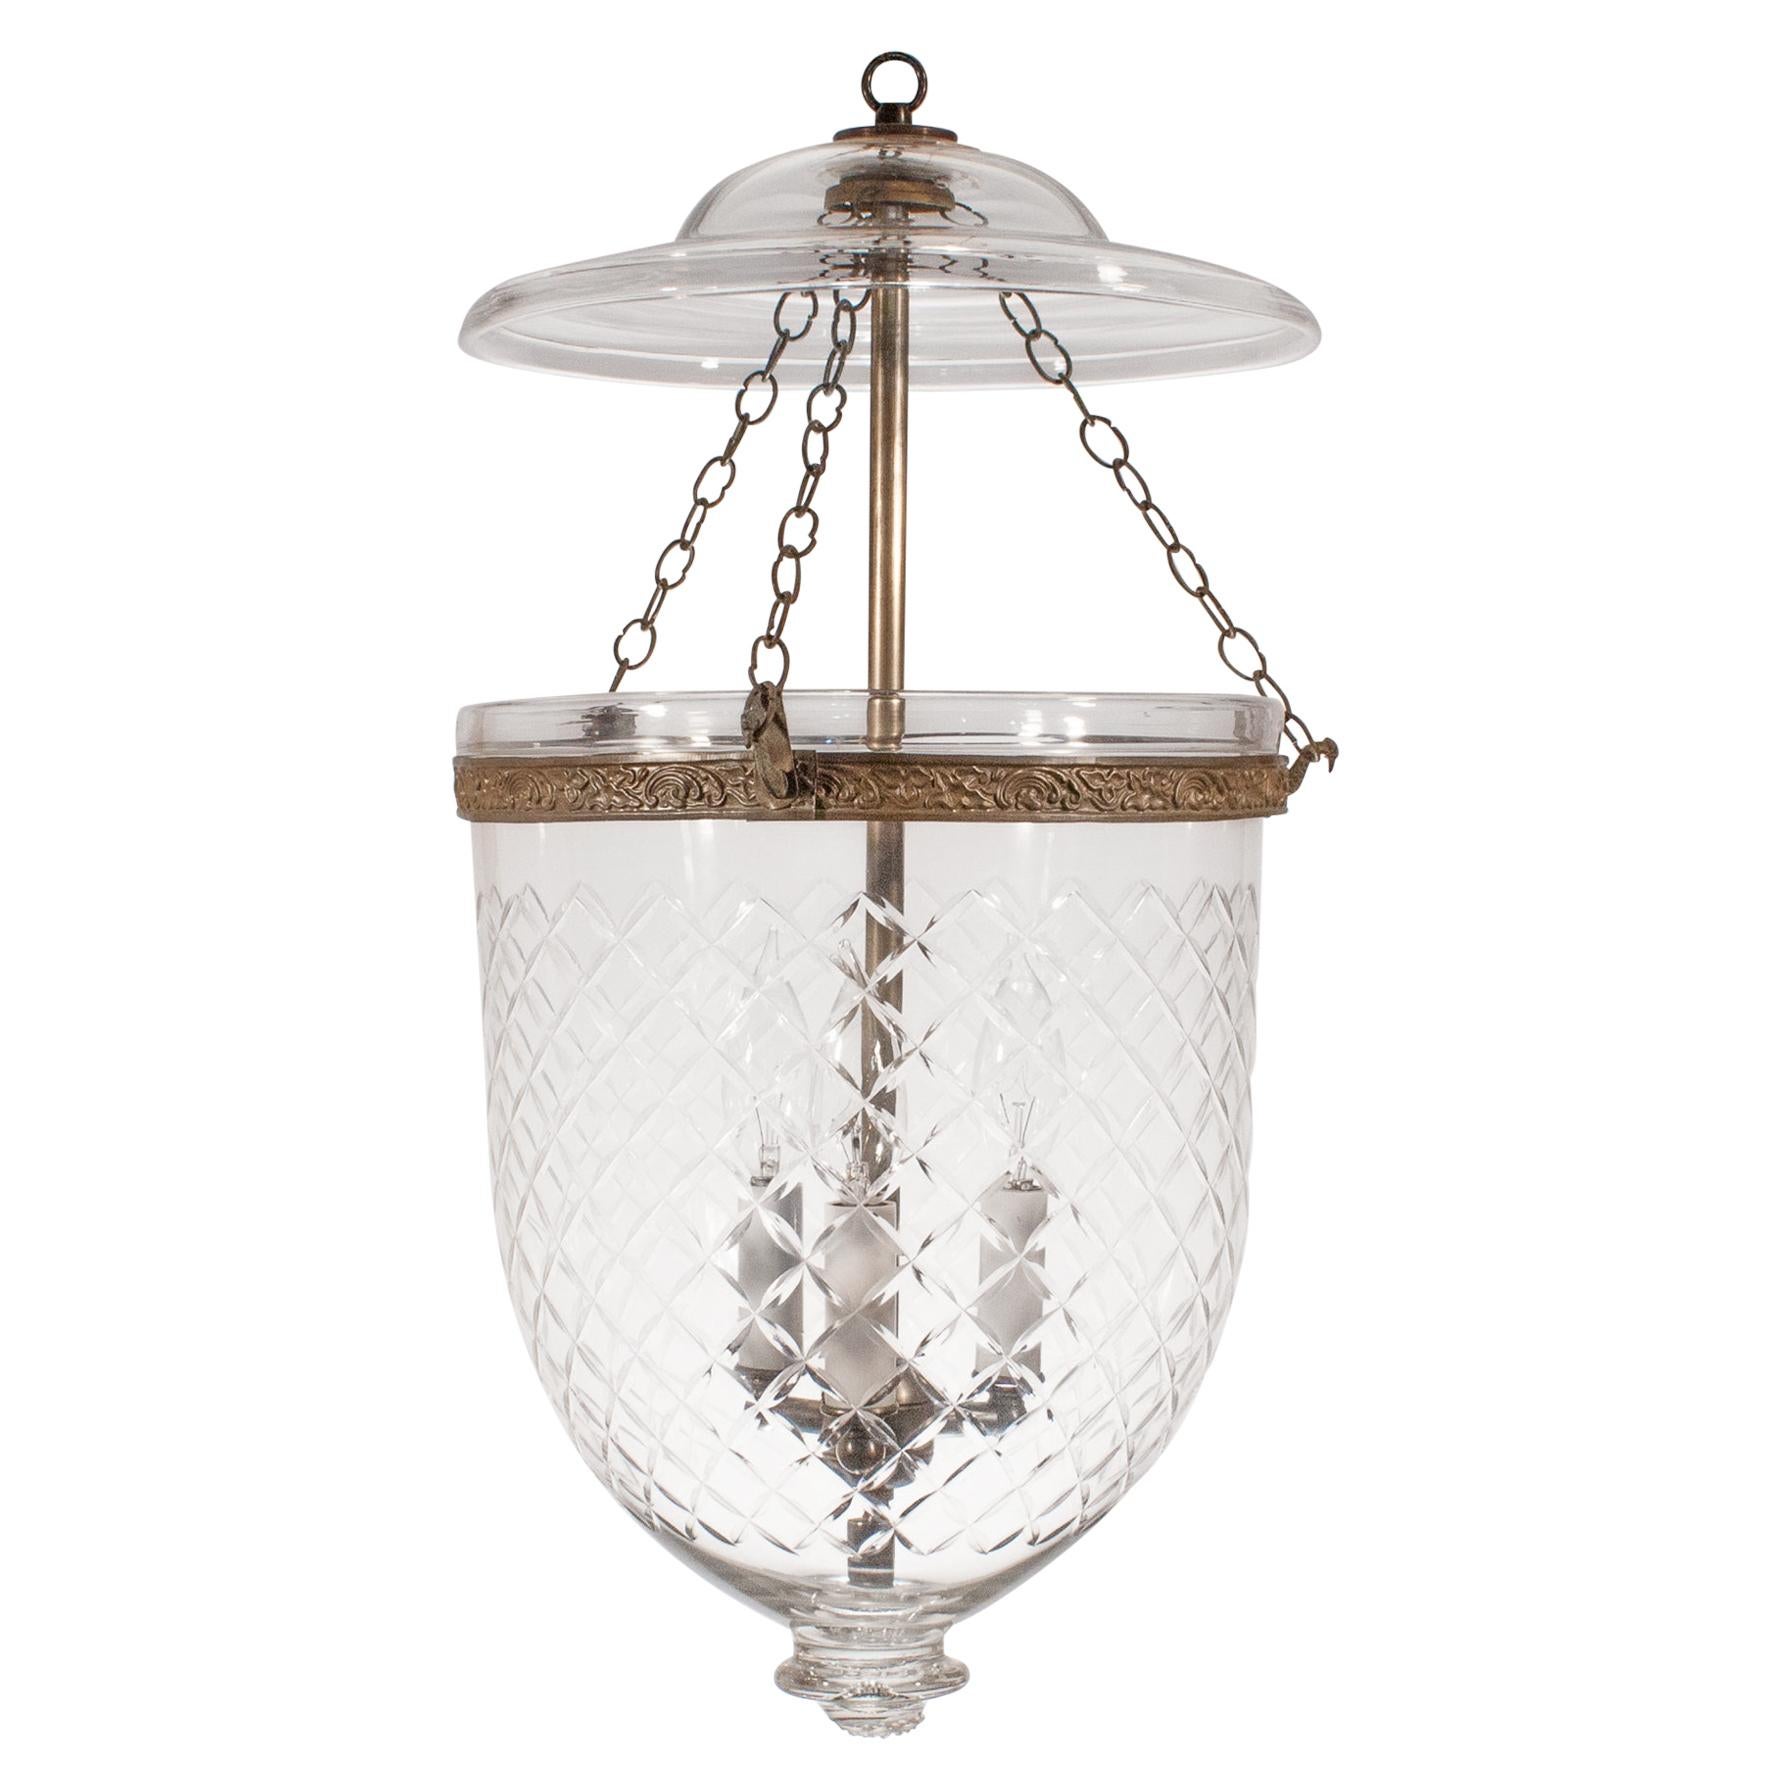 Antique Bell Jar Lantern with Diamond Etching